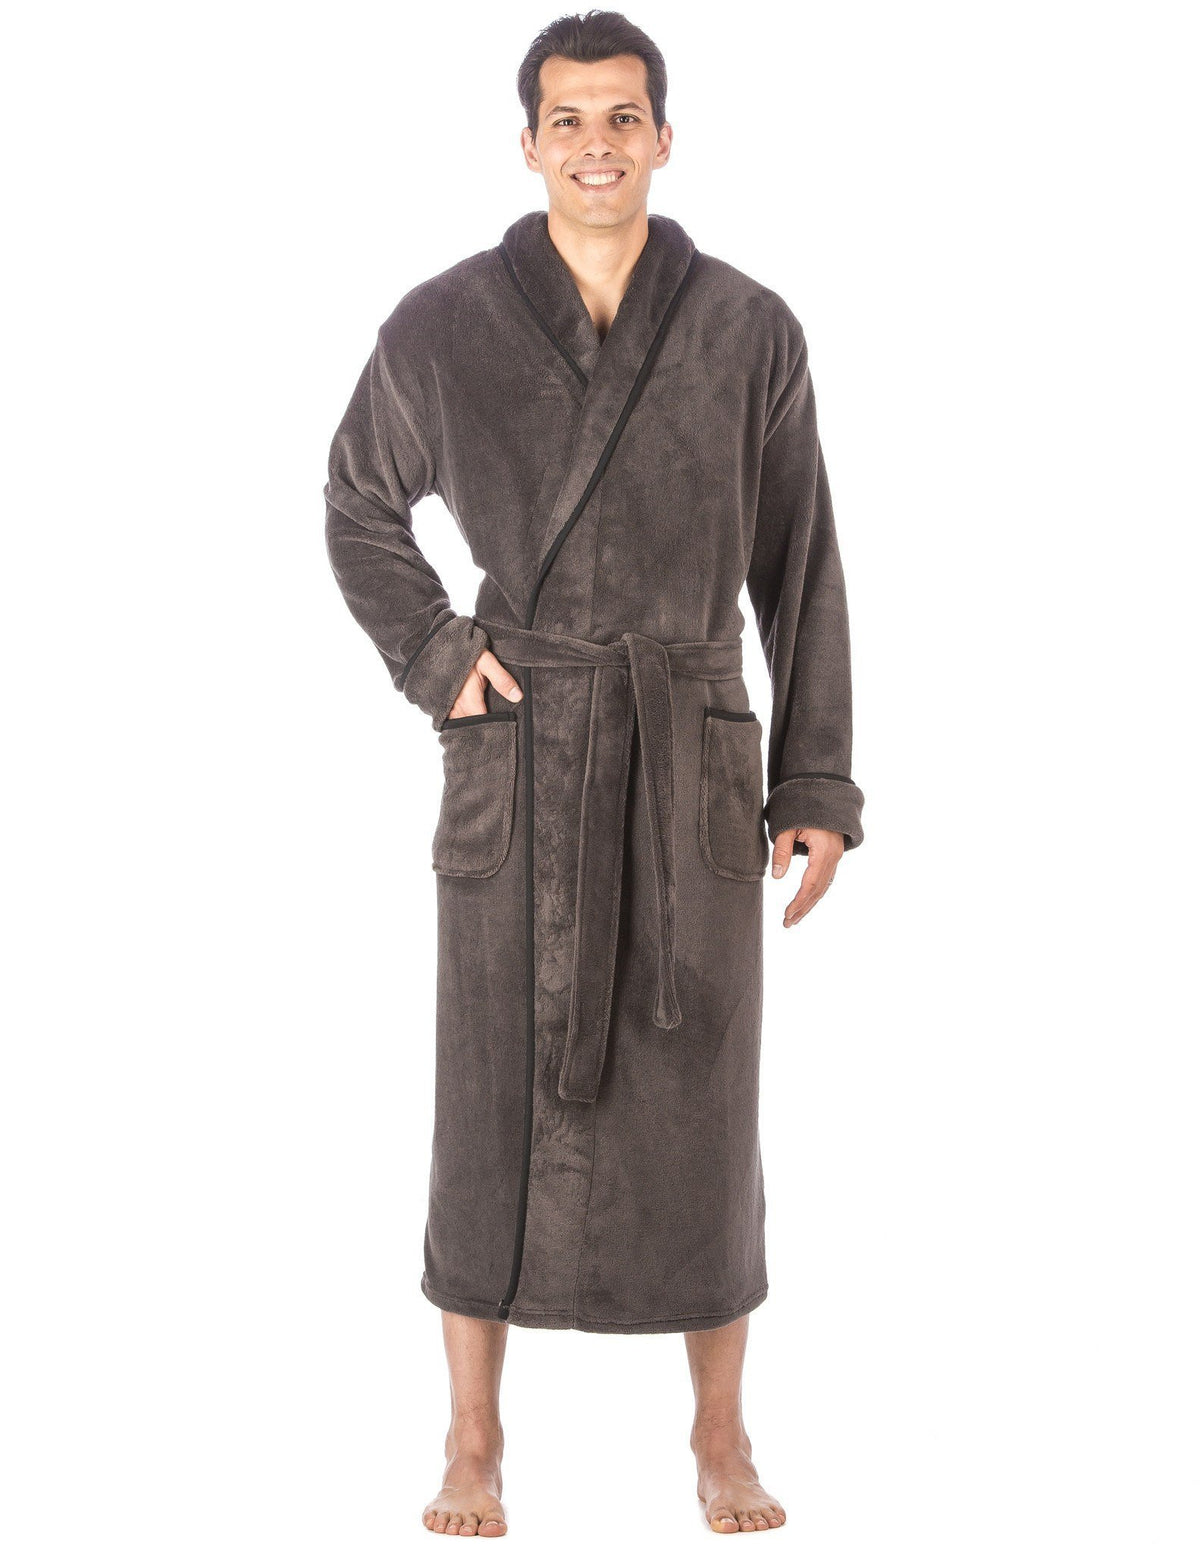 Men's Premium Coral Fleece Long Hooded Plush Spa/Bath Robe - Dark Gray